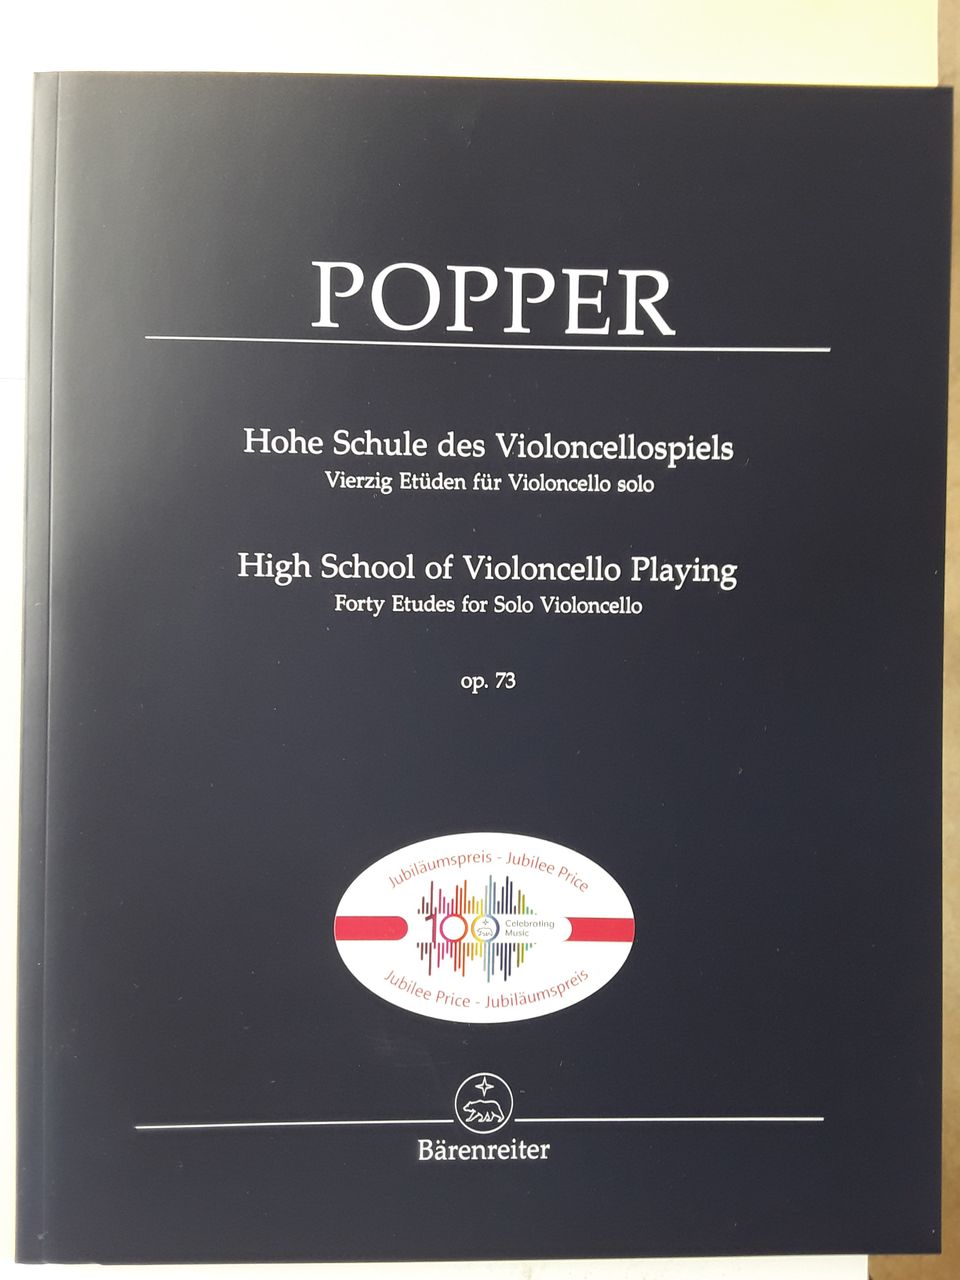 Nuotti: Popper: High School Violoncello, 40 etydiä, op. 73, sello